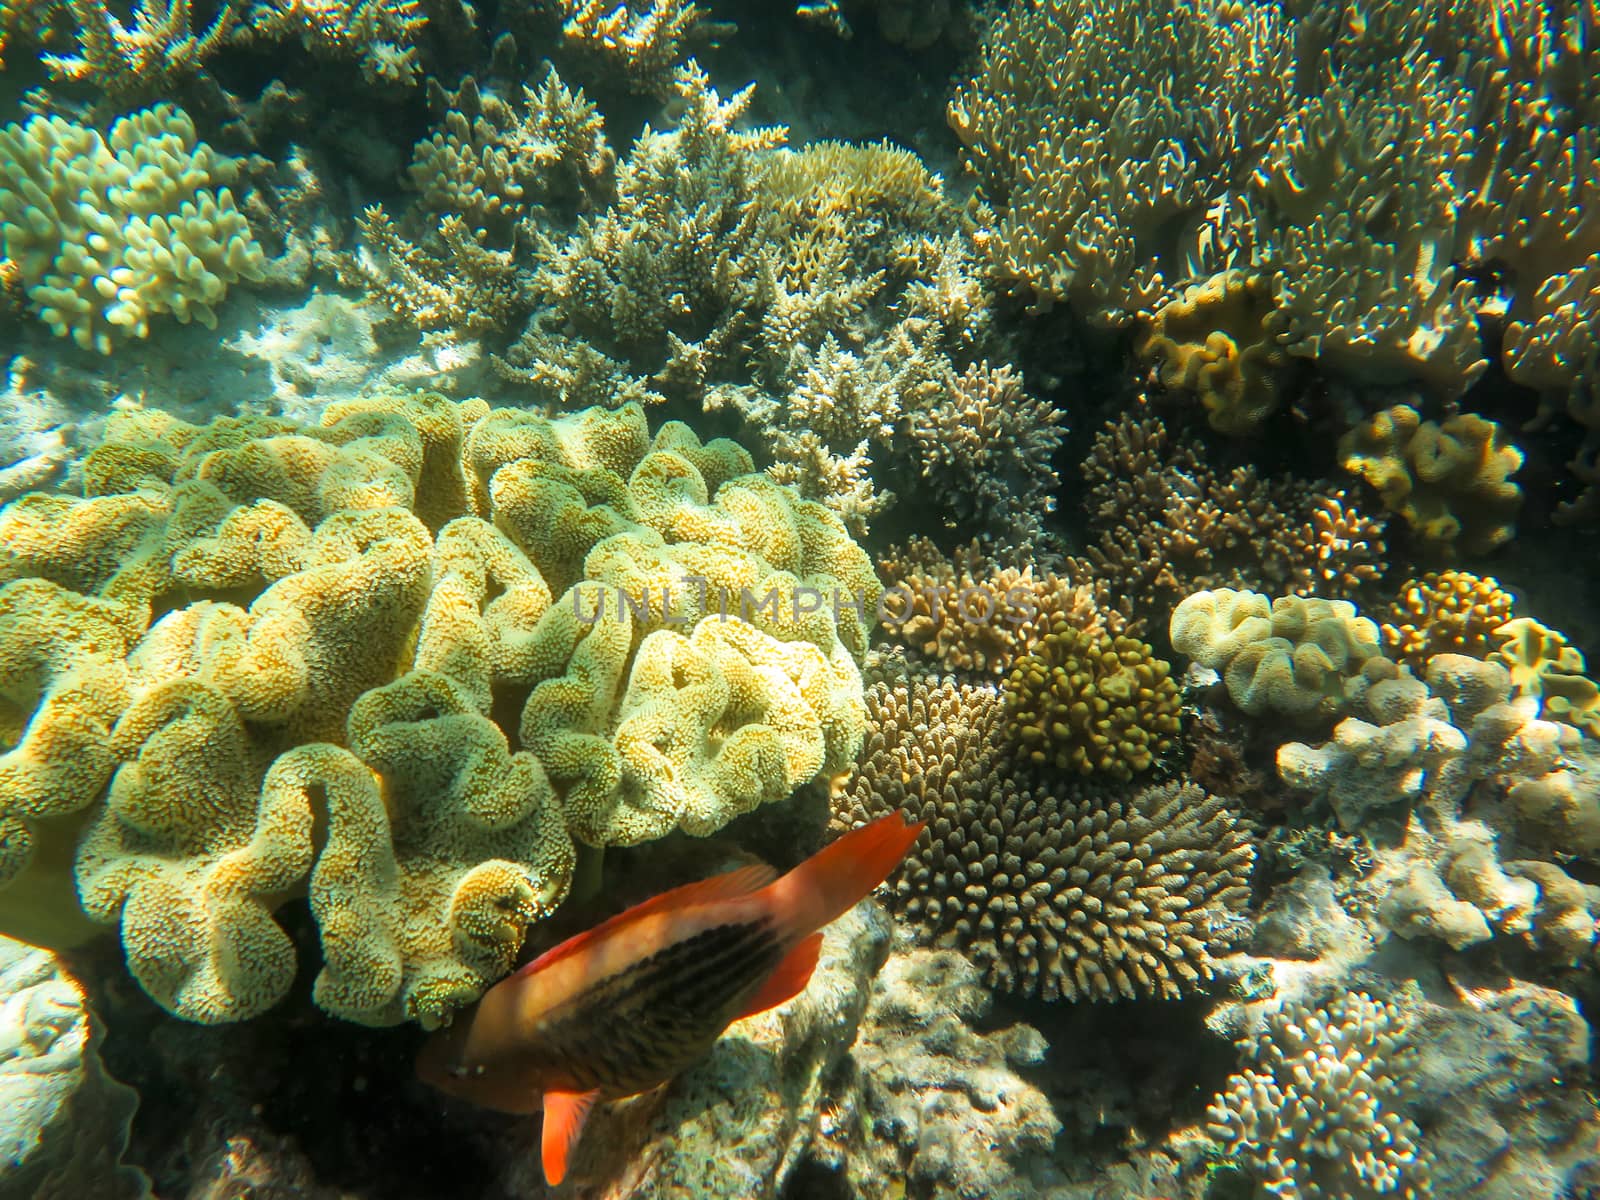 Underwater View of the Great Barrier Reef by NikkiGensert